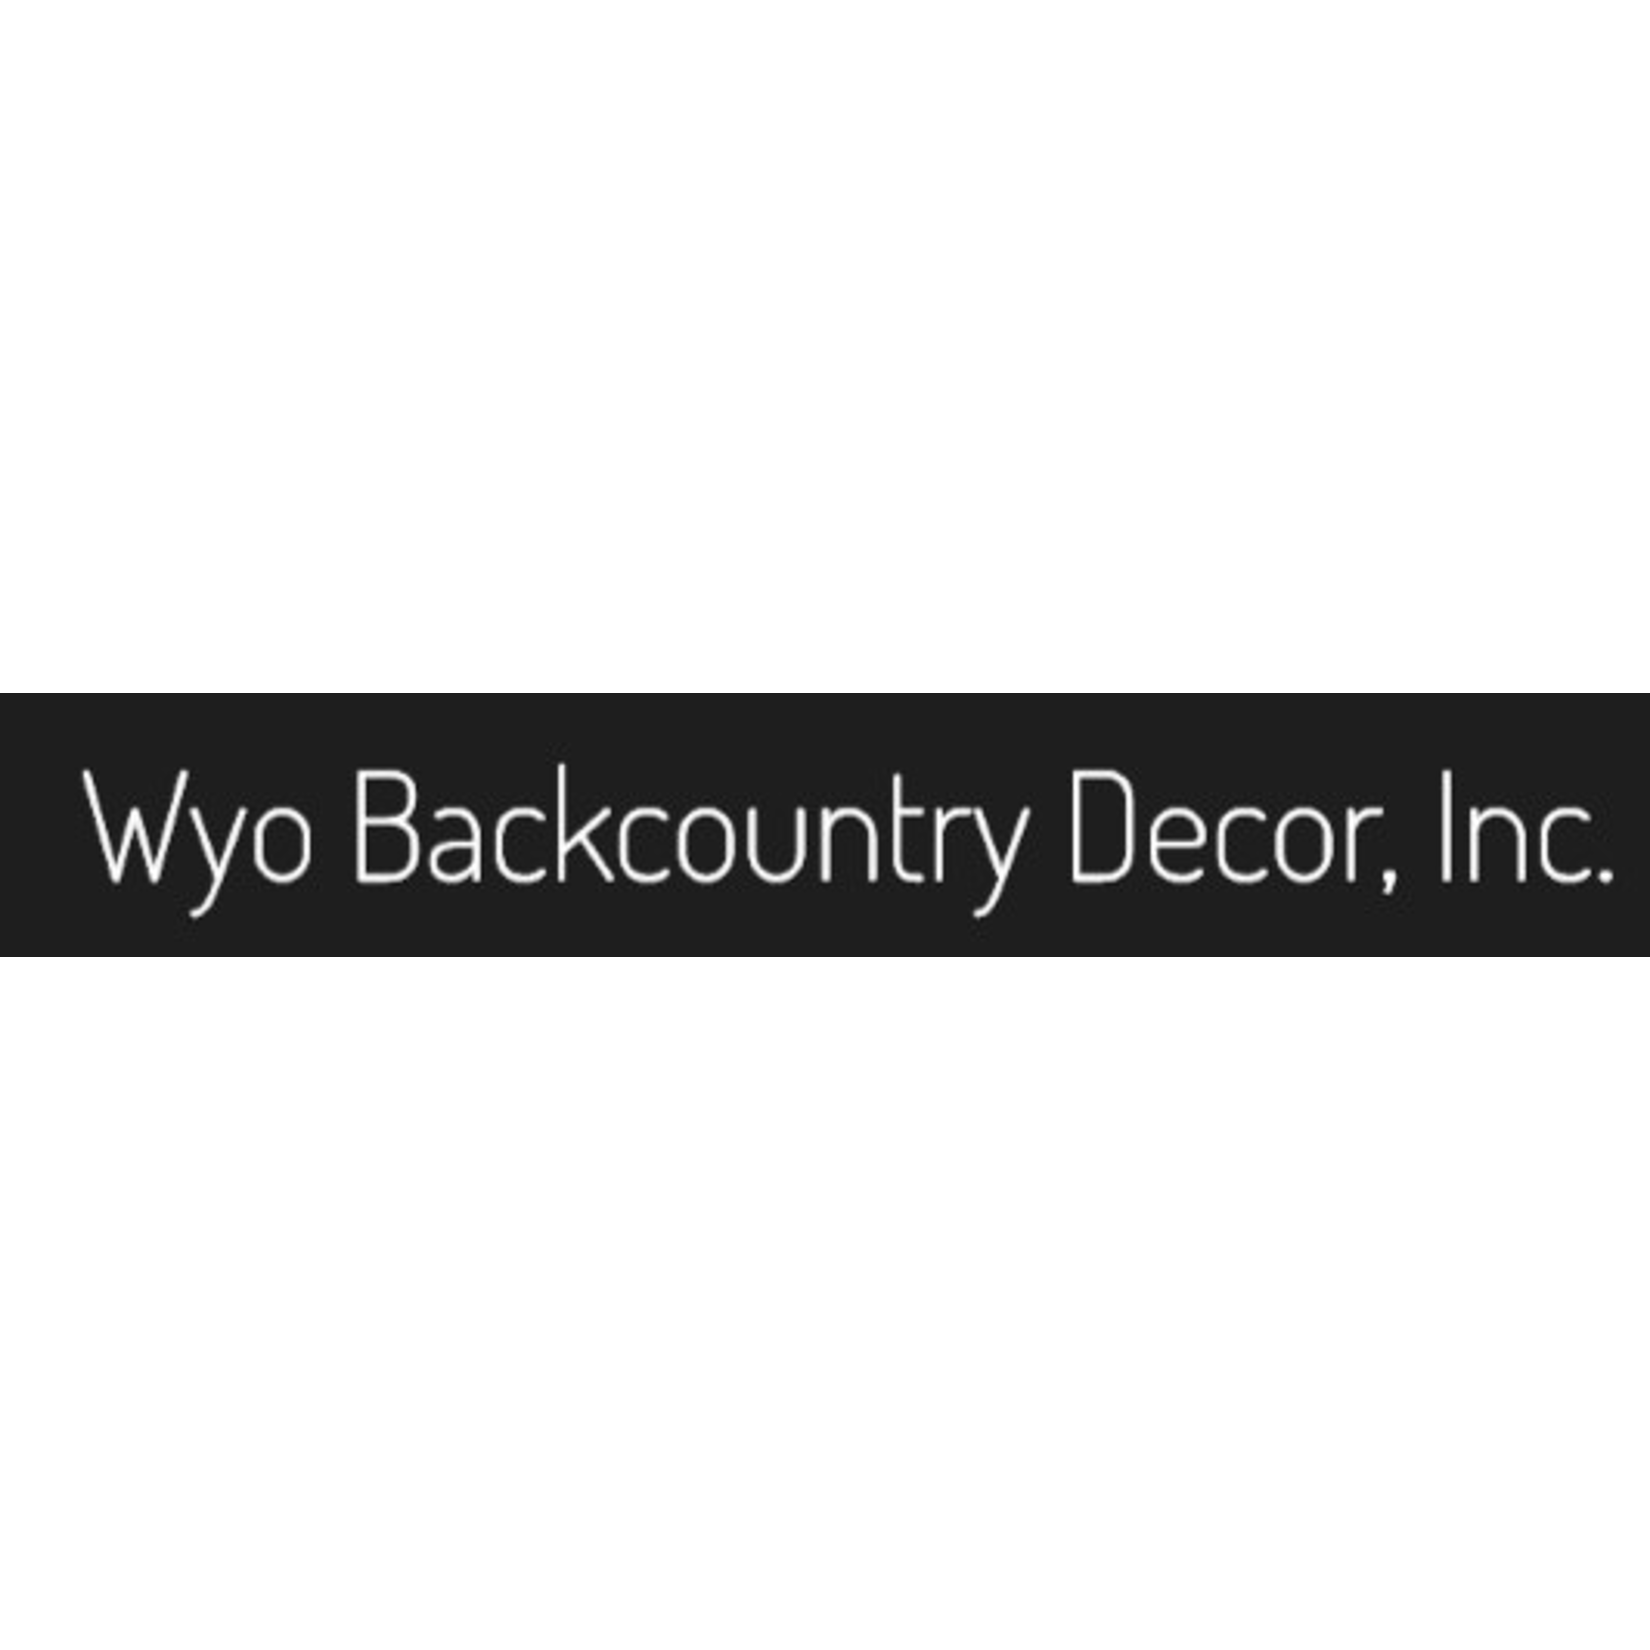 Wyo Backcountry Decor